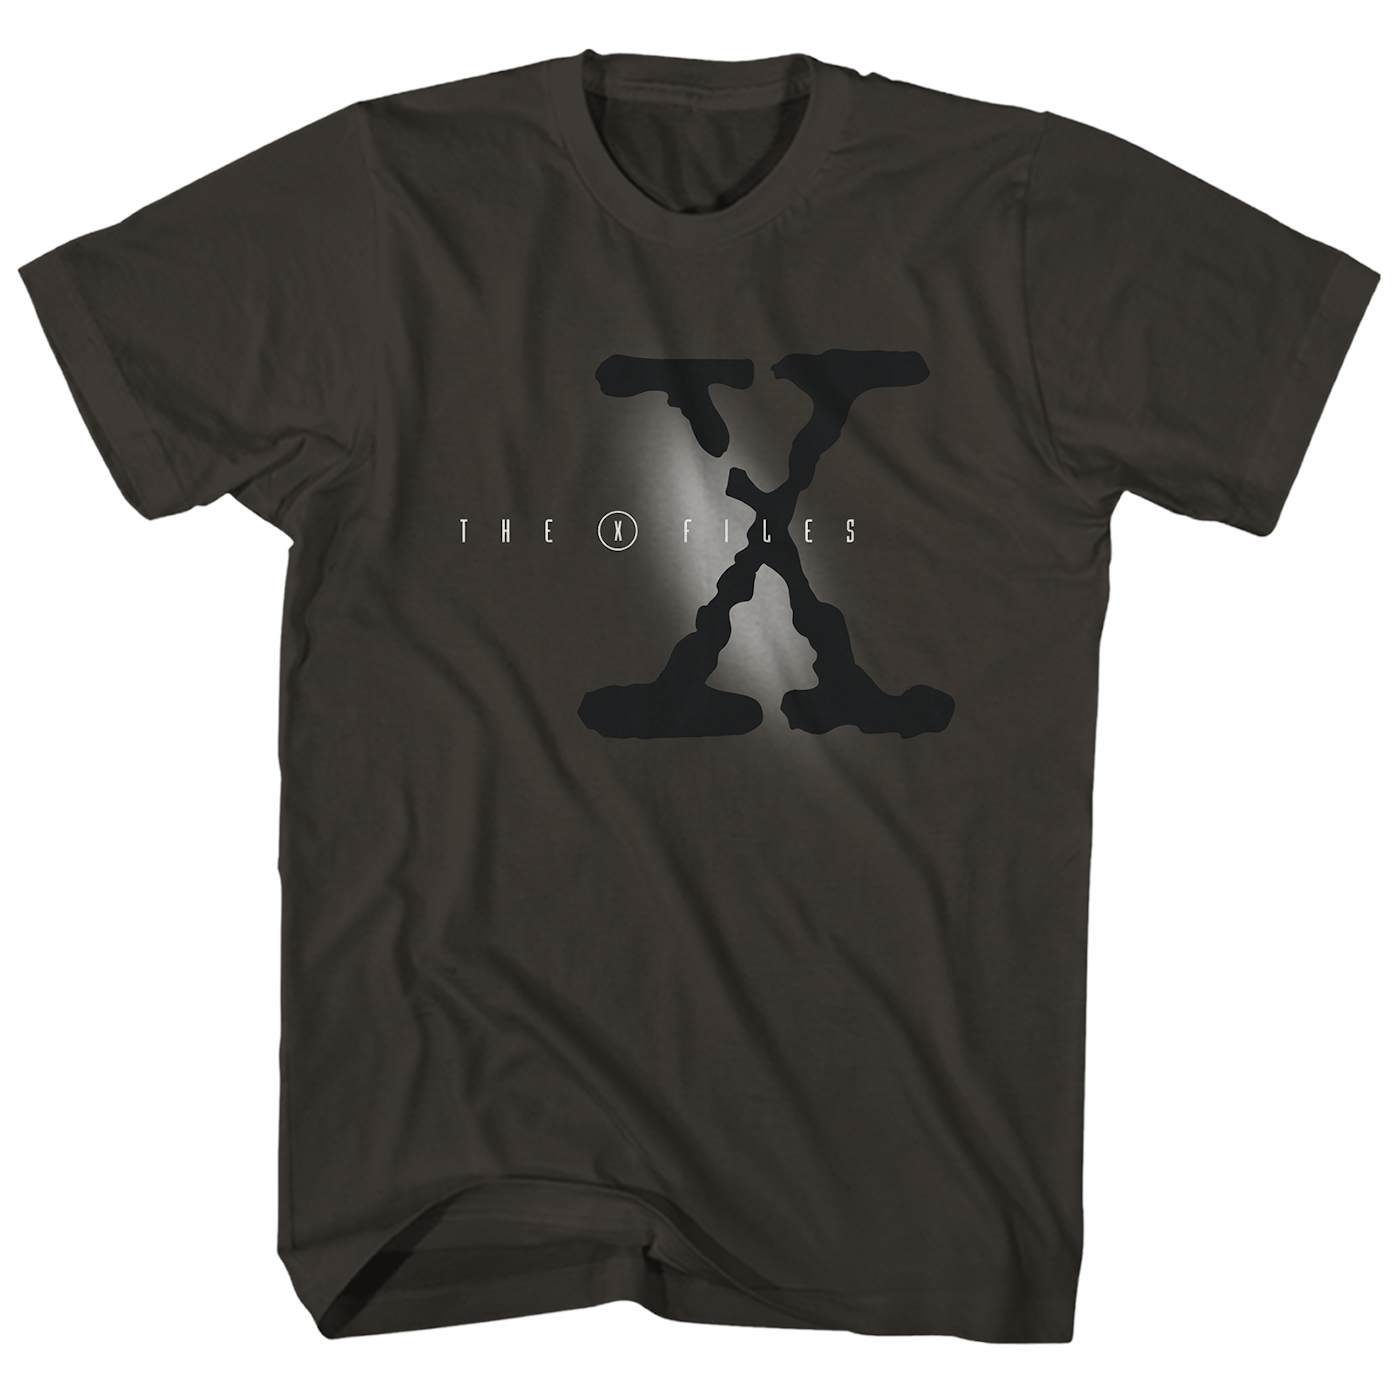 The T-Shirt | Official Logo The Shirt